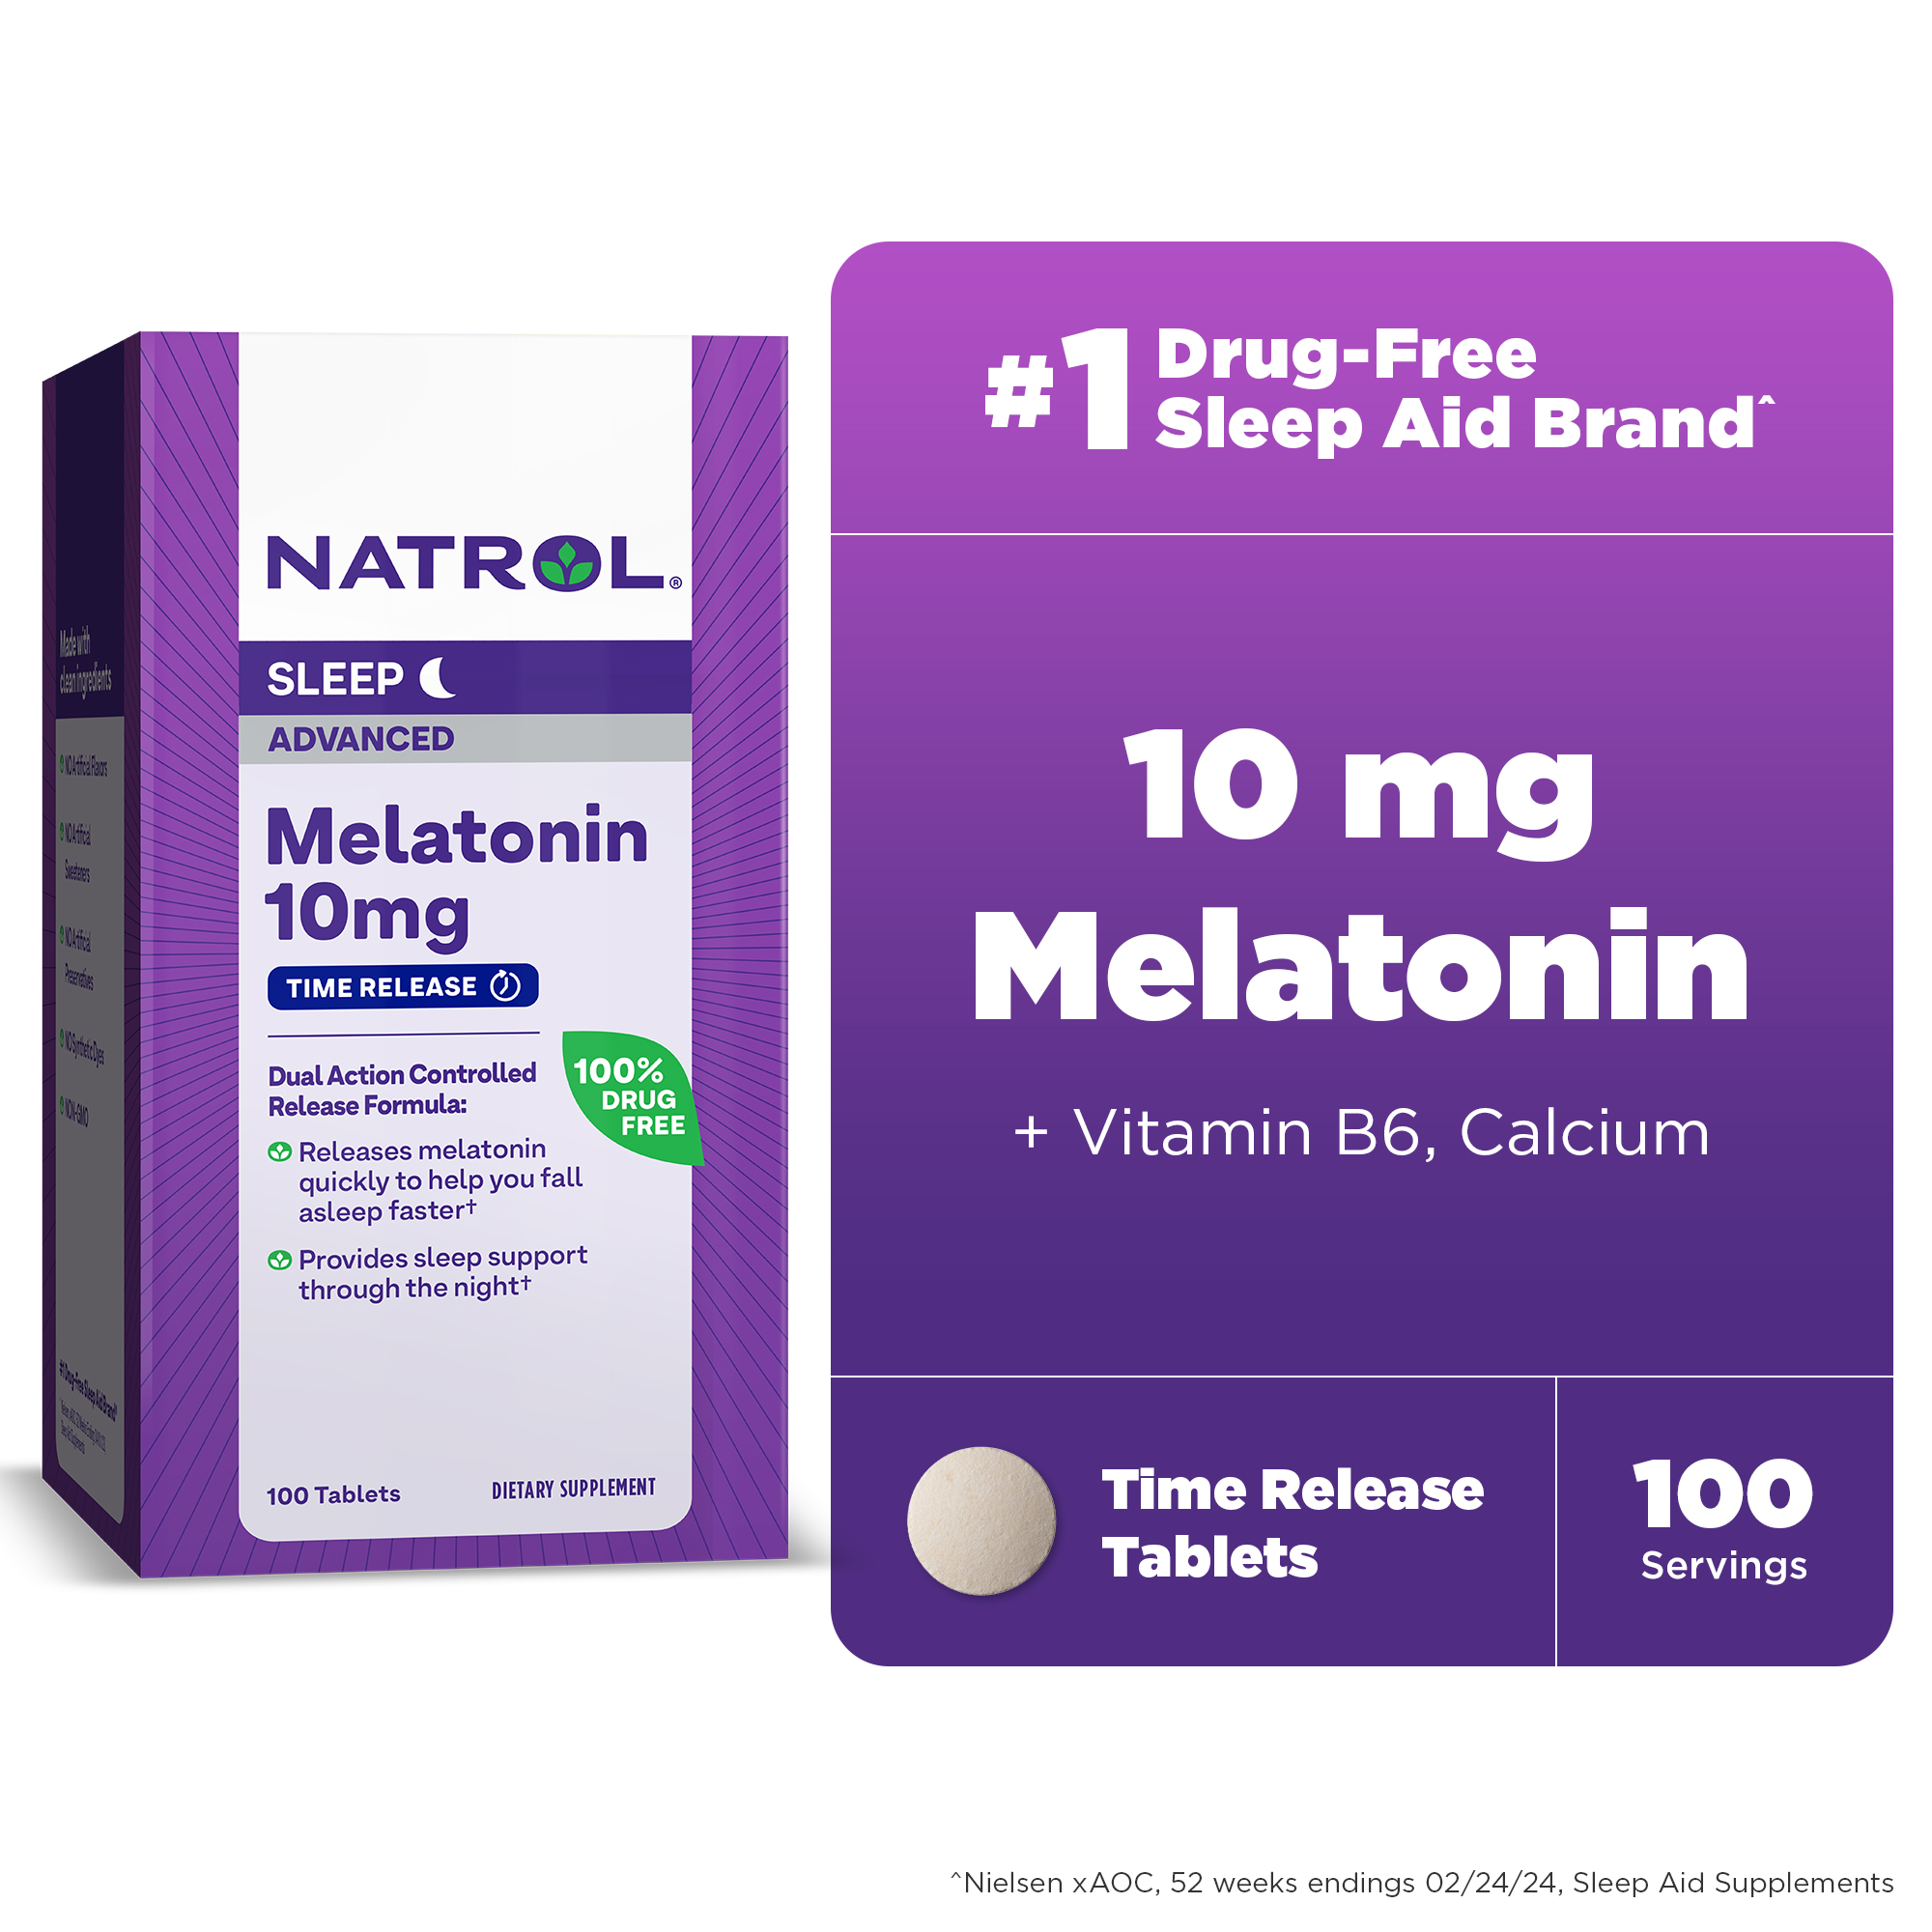 Natrol® Advanced Sleep Melatonin 10mg, Dietary Supplement for Restful Sleep, Time Release Melatonin Tablets, 100 Time-Release Tablets, 100 Day Supply - image 1 of 8